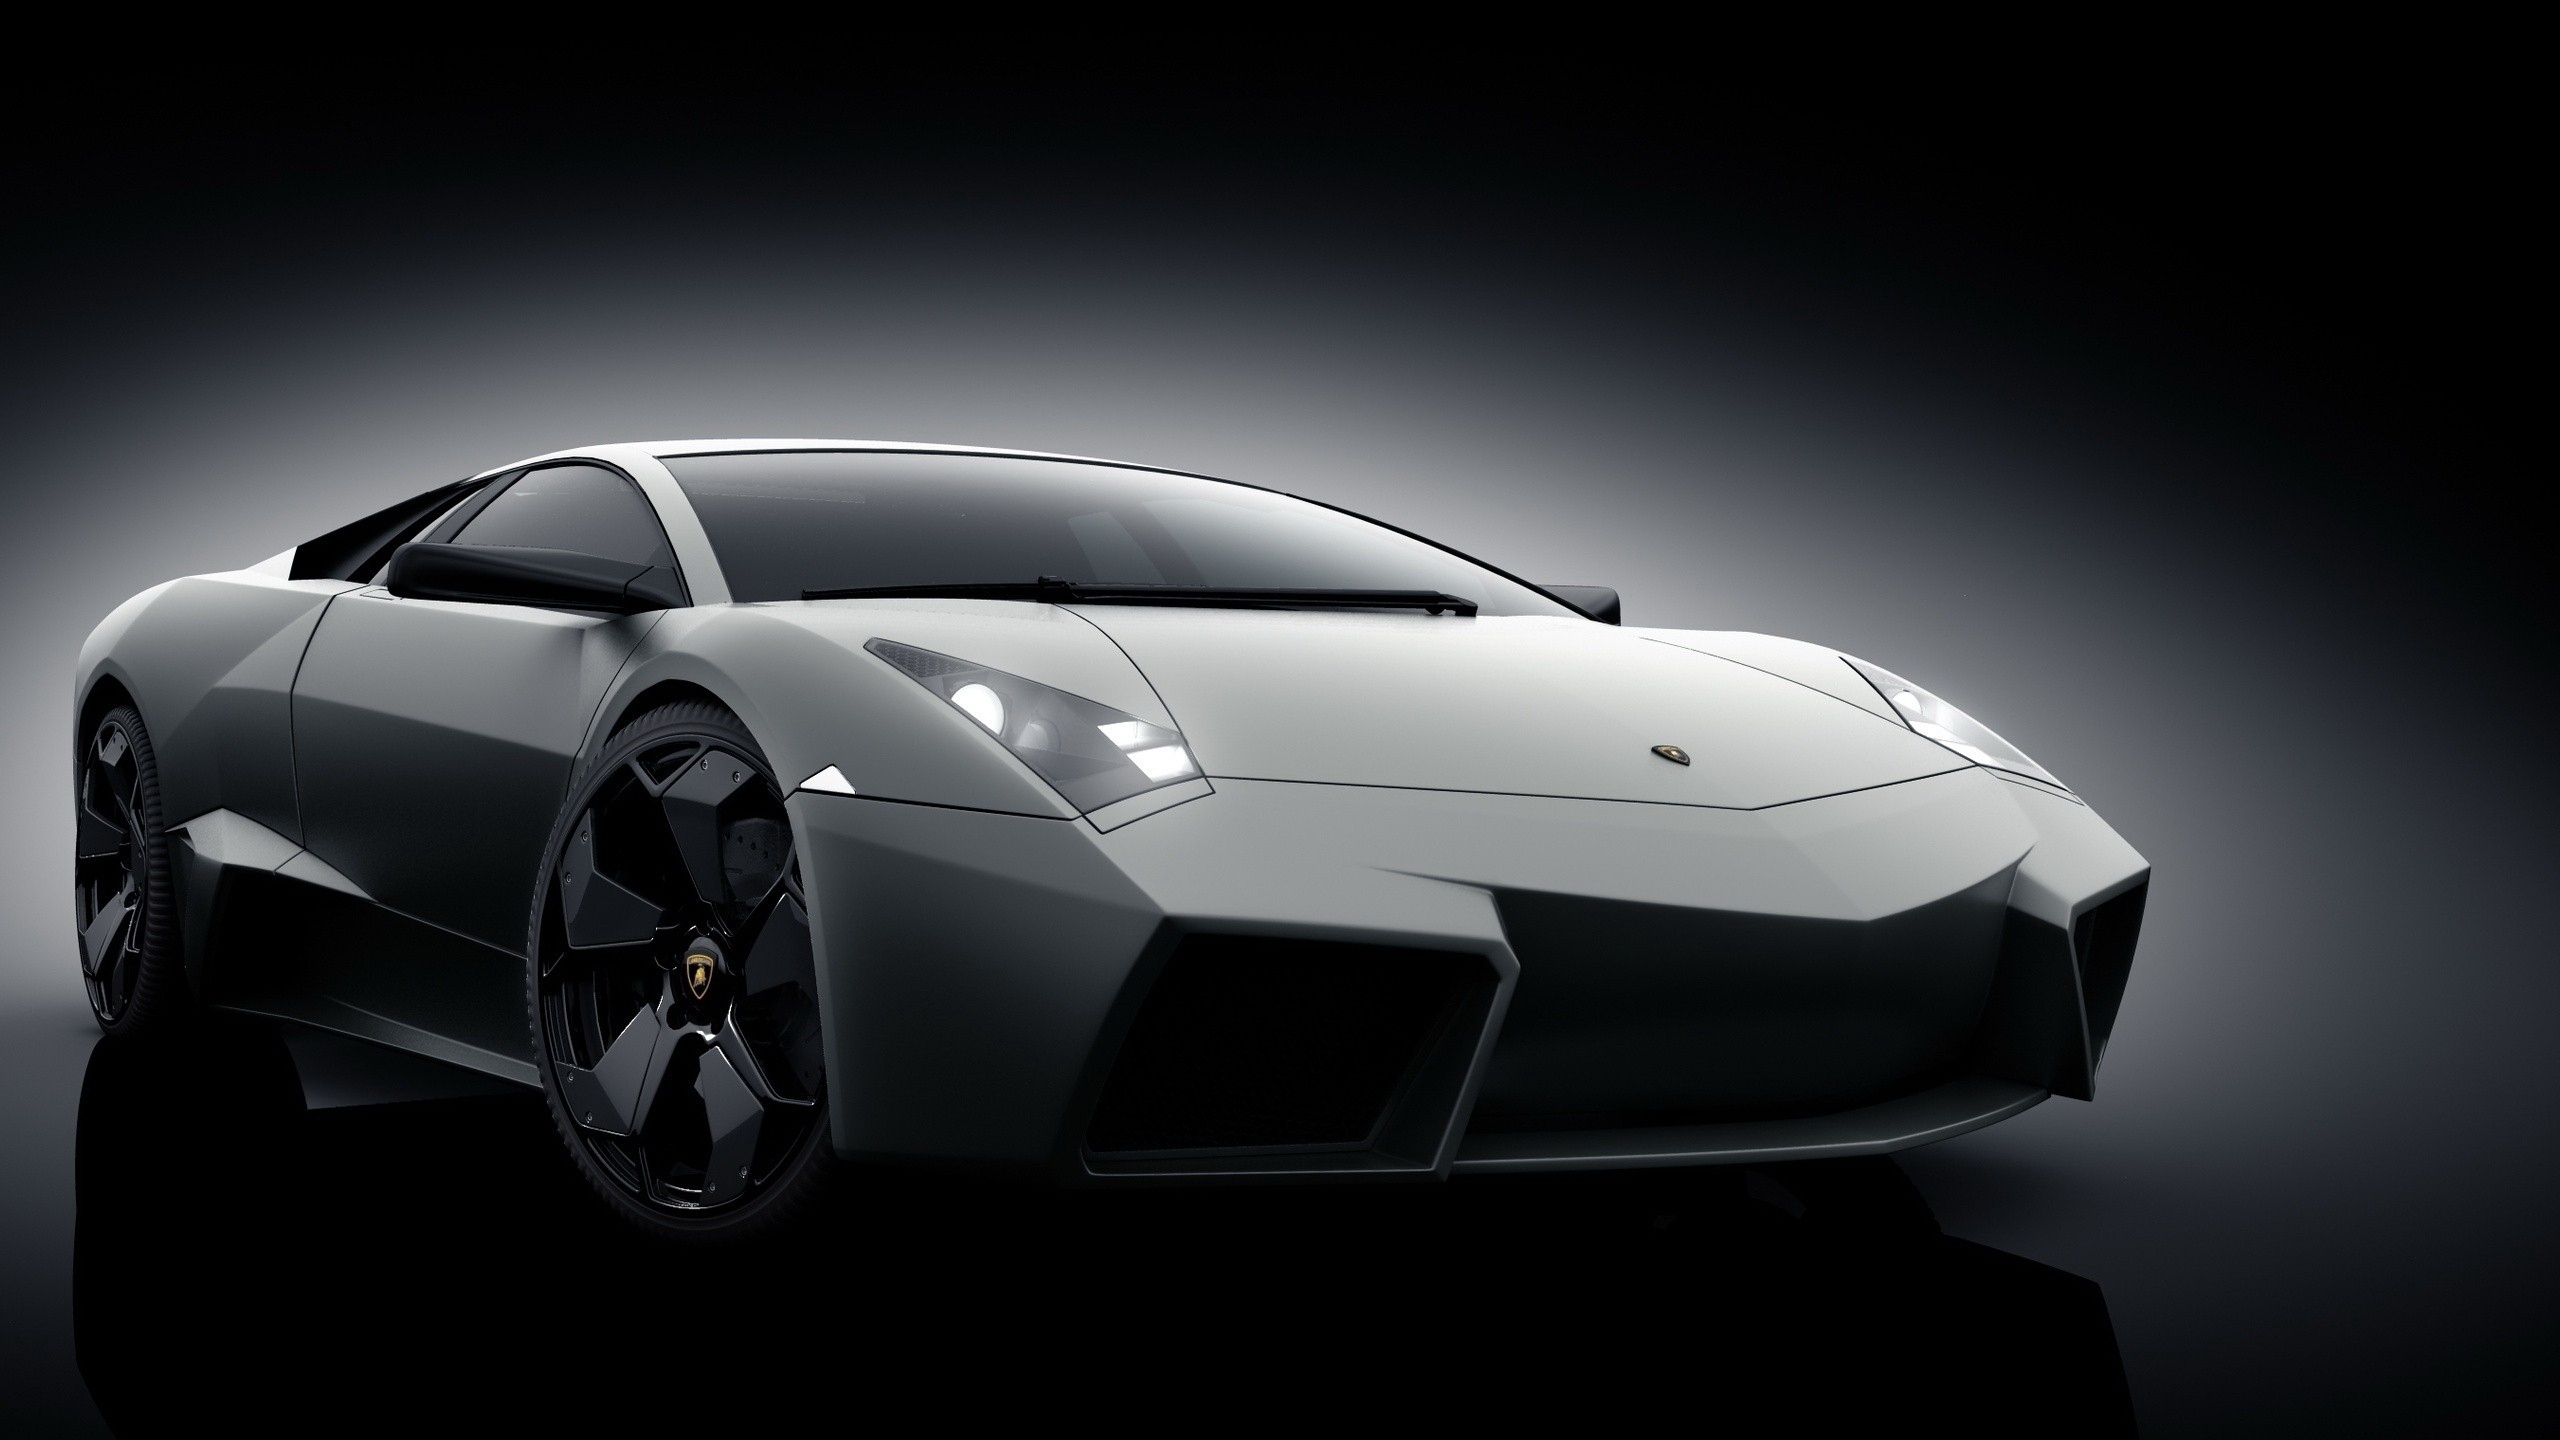 Grey Lamborghini Reventon for 2560x1440 HDTV resolution